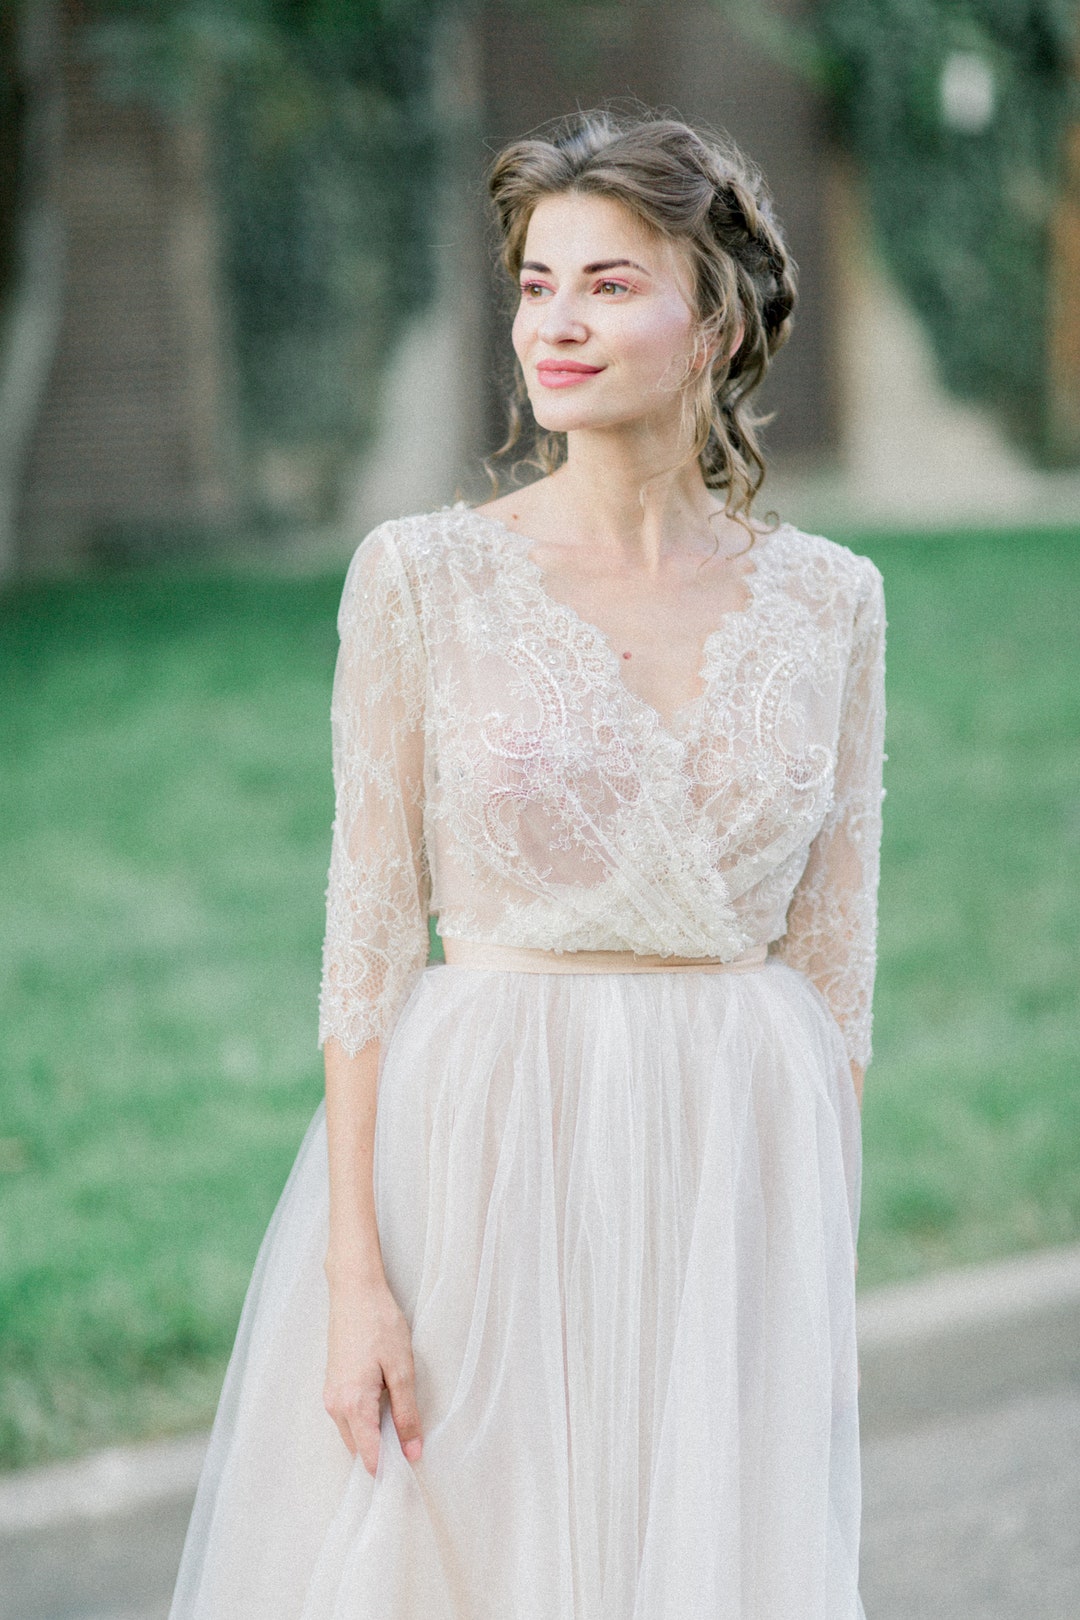 Bridal Bodysuit With Tulle Skirt Wedding Dress, Long Sleeve Lace Bodysuit,  Simple Modern Long Sleeves Lace Wedding Dress Bonita 0185 / 2021 -   Canada